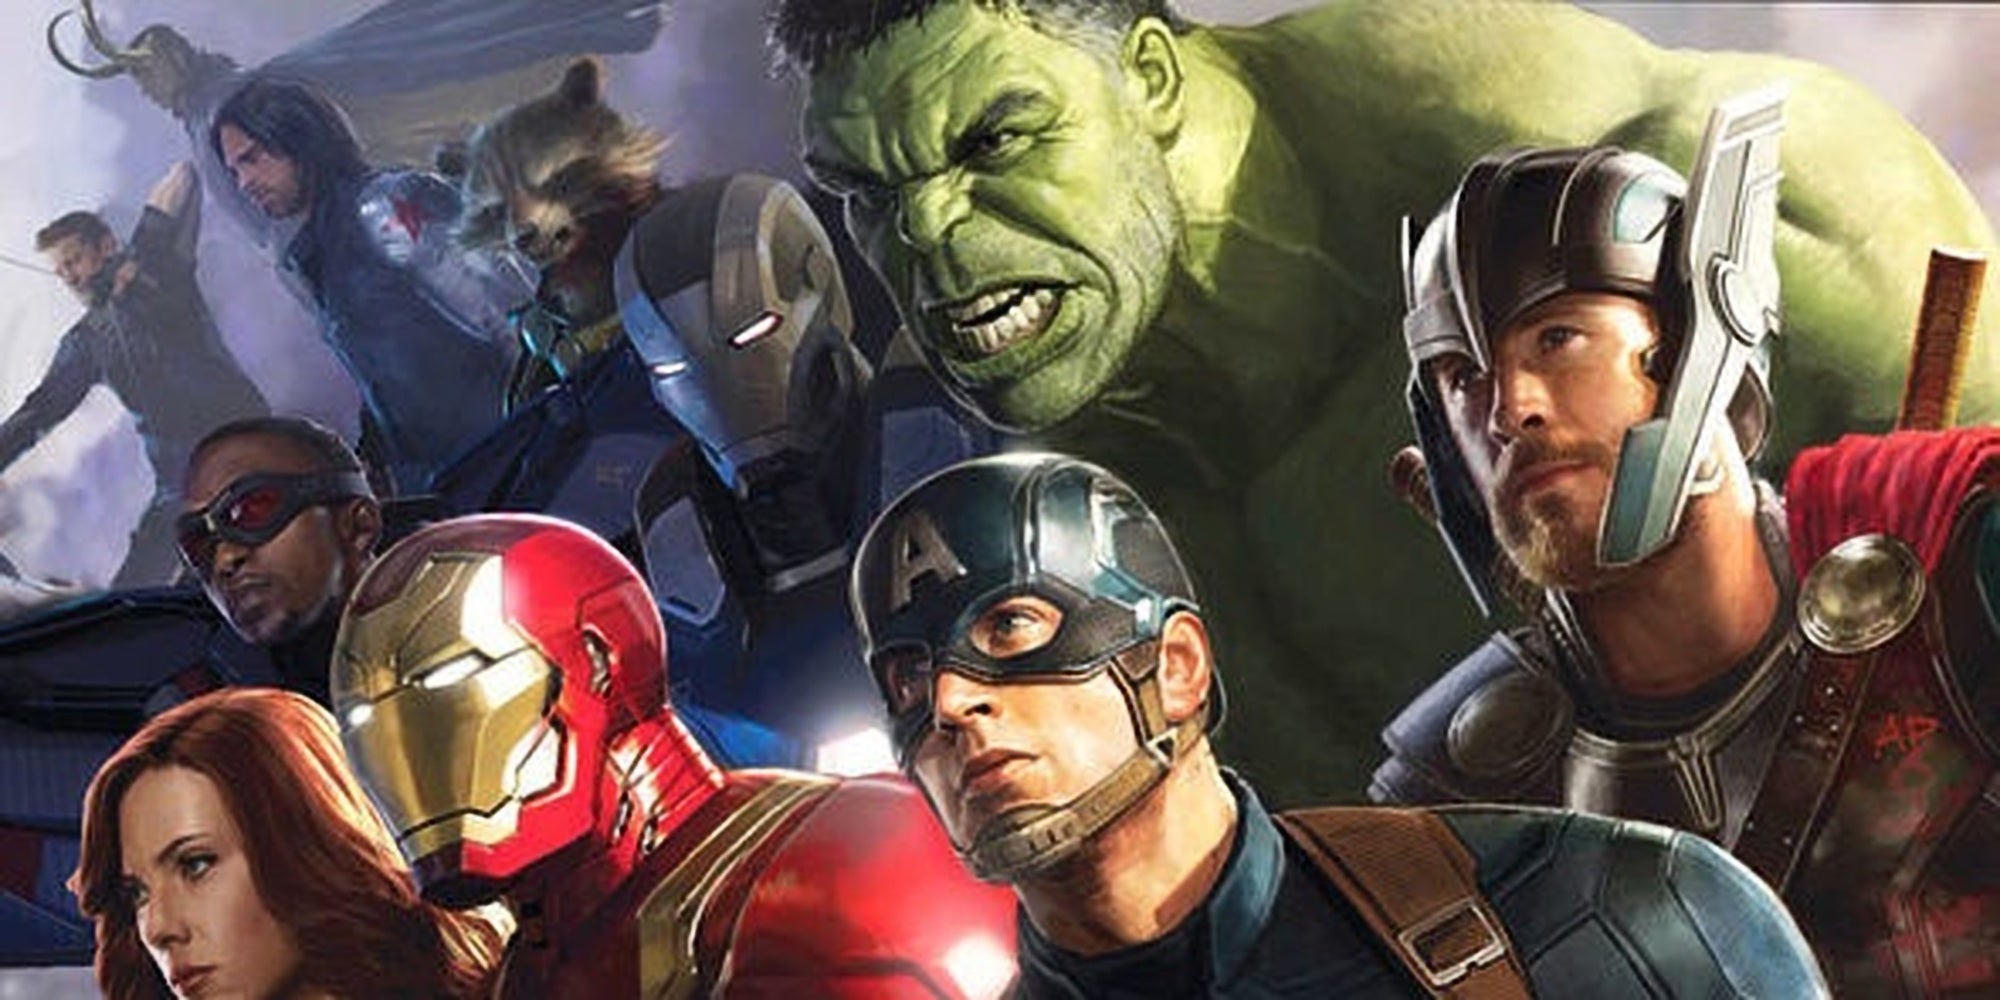 Avengers: Endgame - what we know so far - BBC News